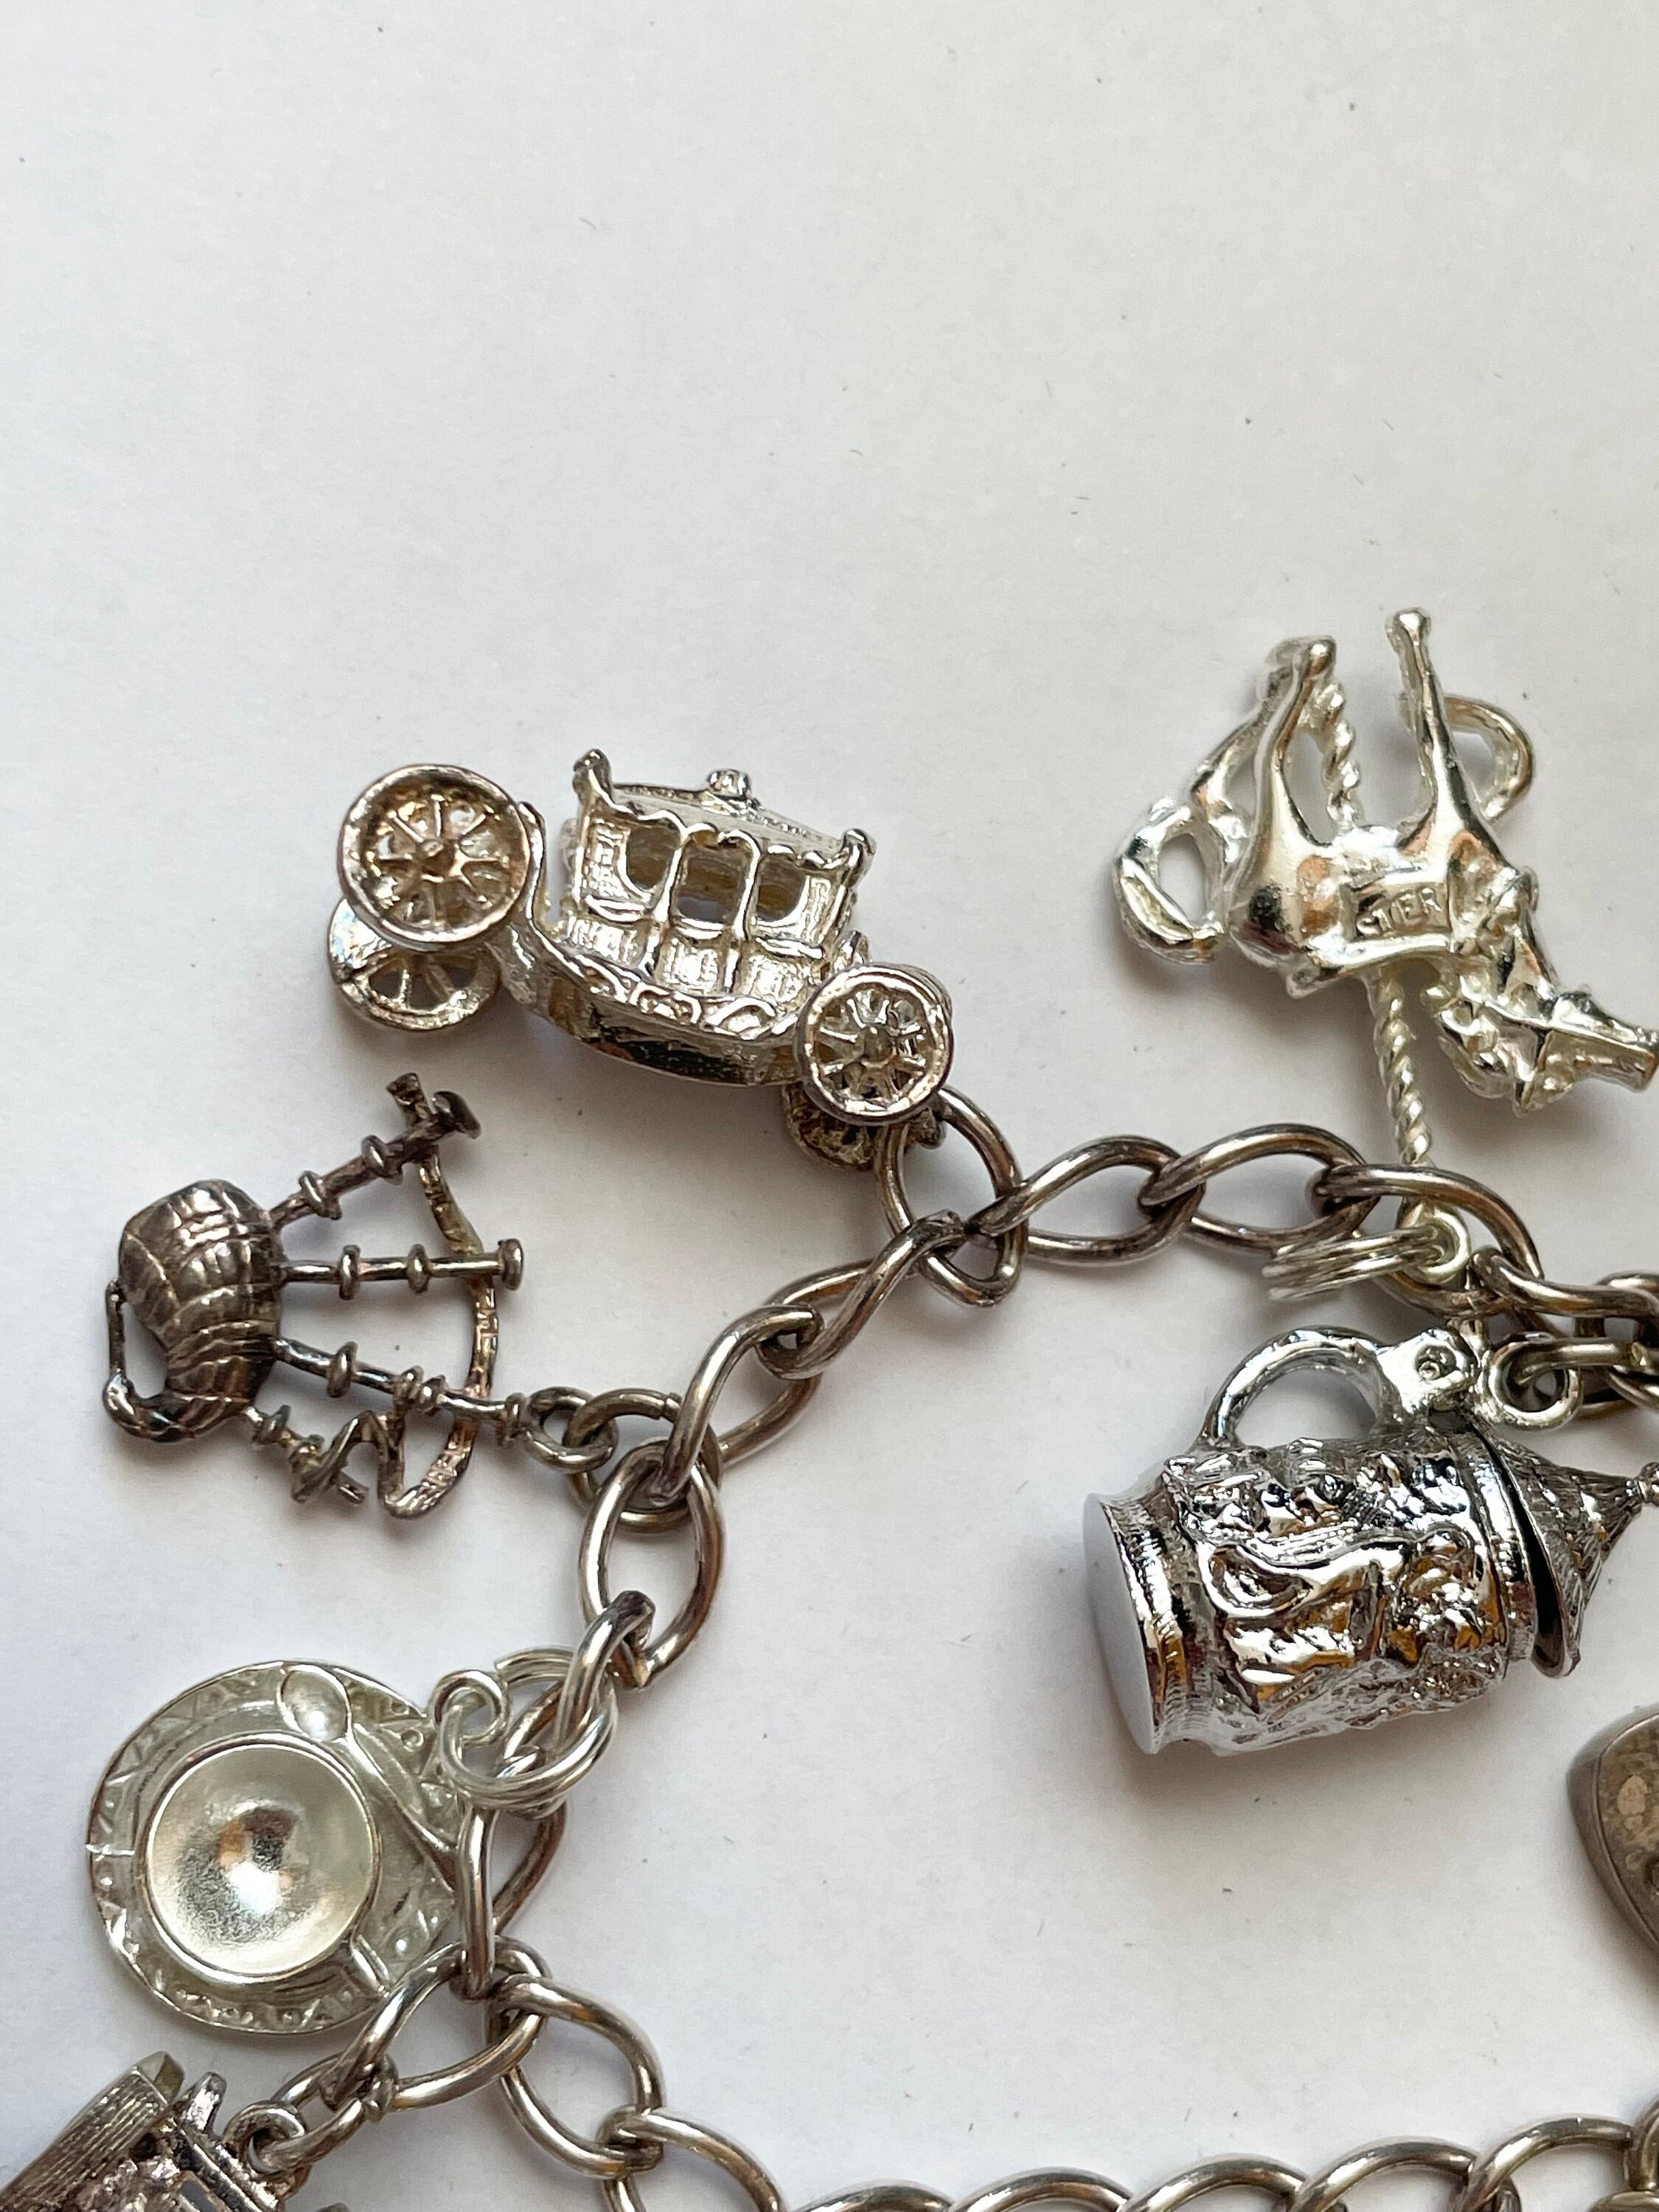 Vintage Sterling Silver Charm Bracelet 13 Charms 